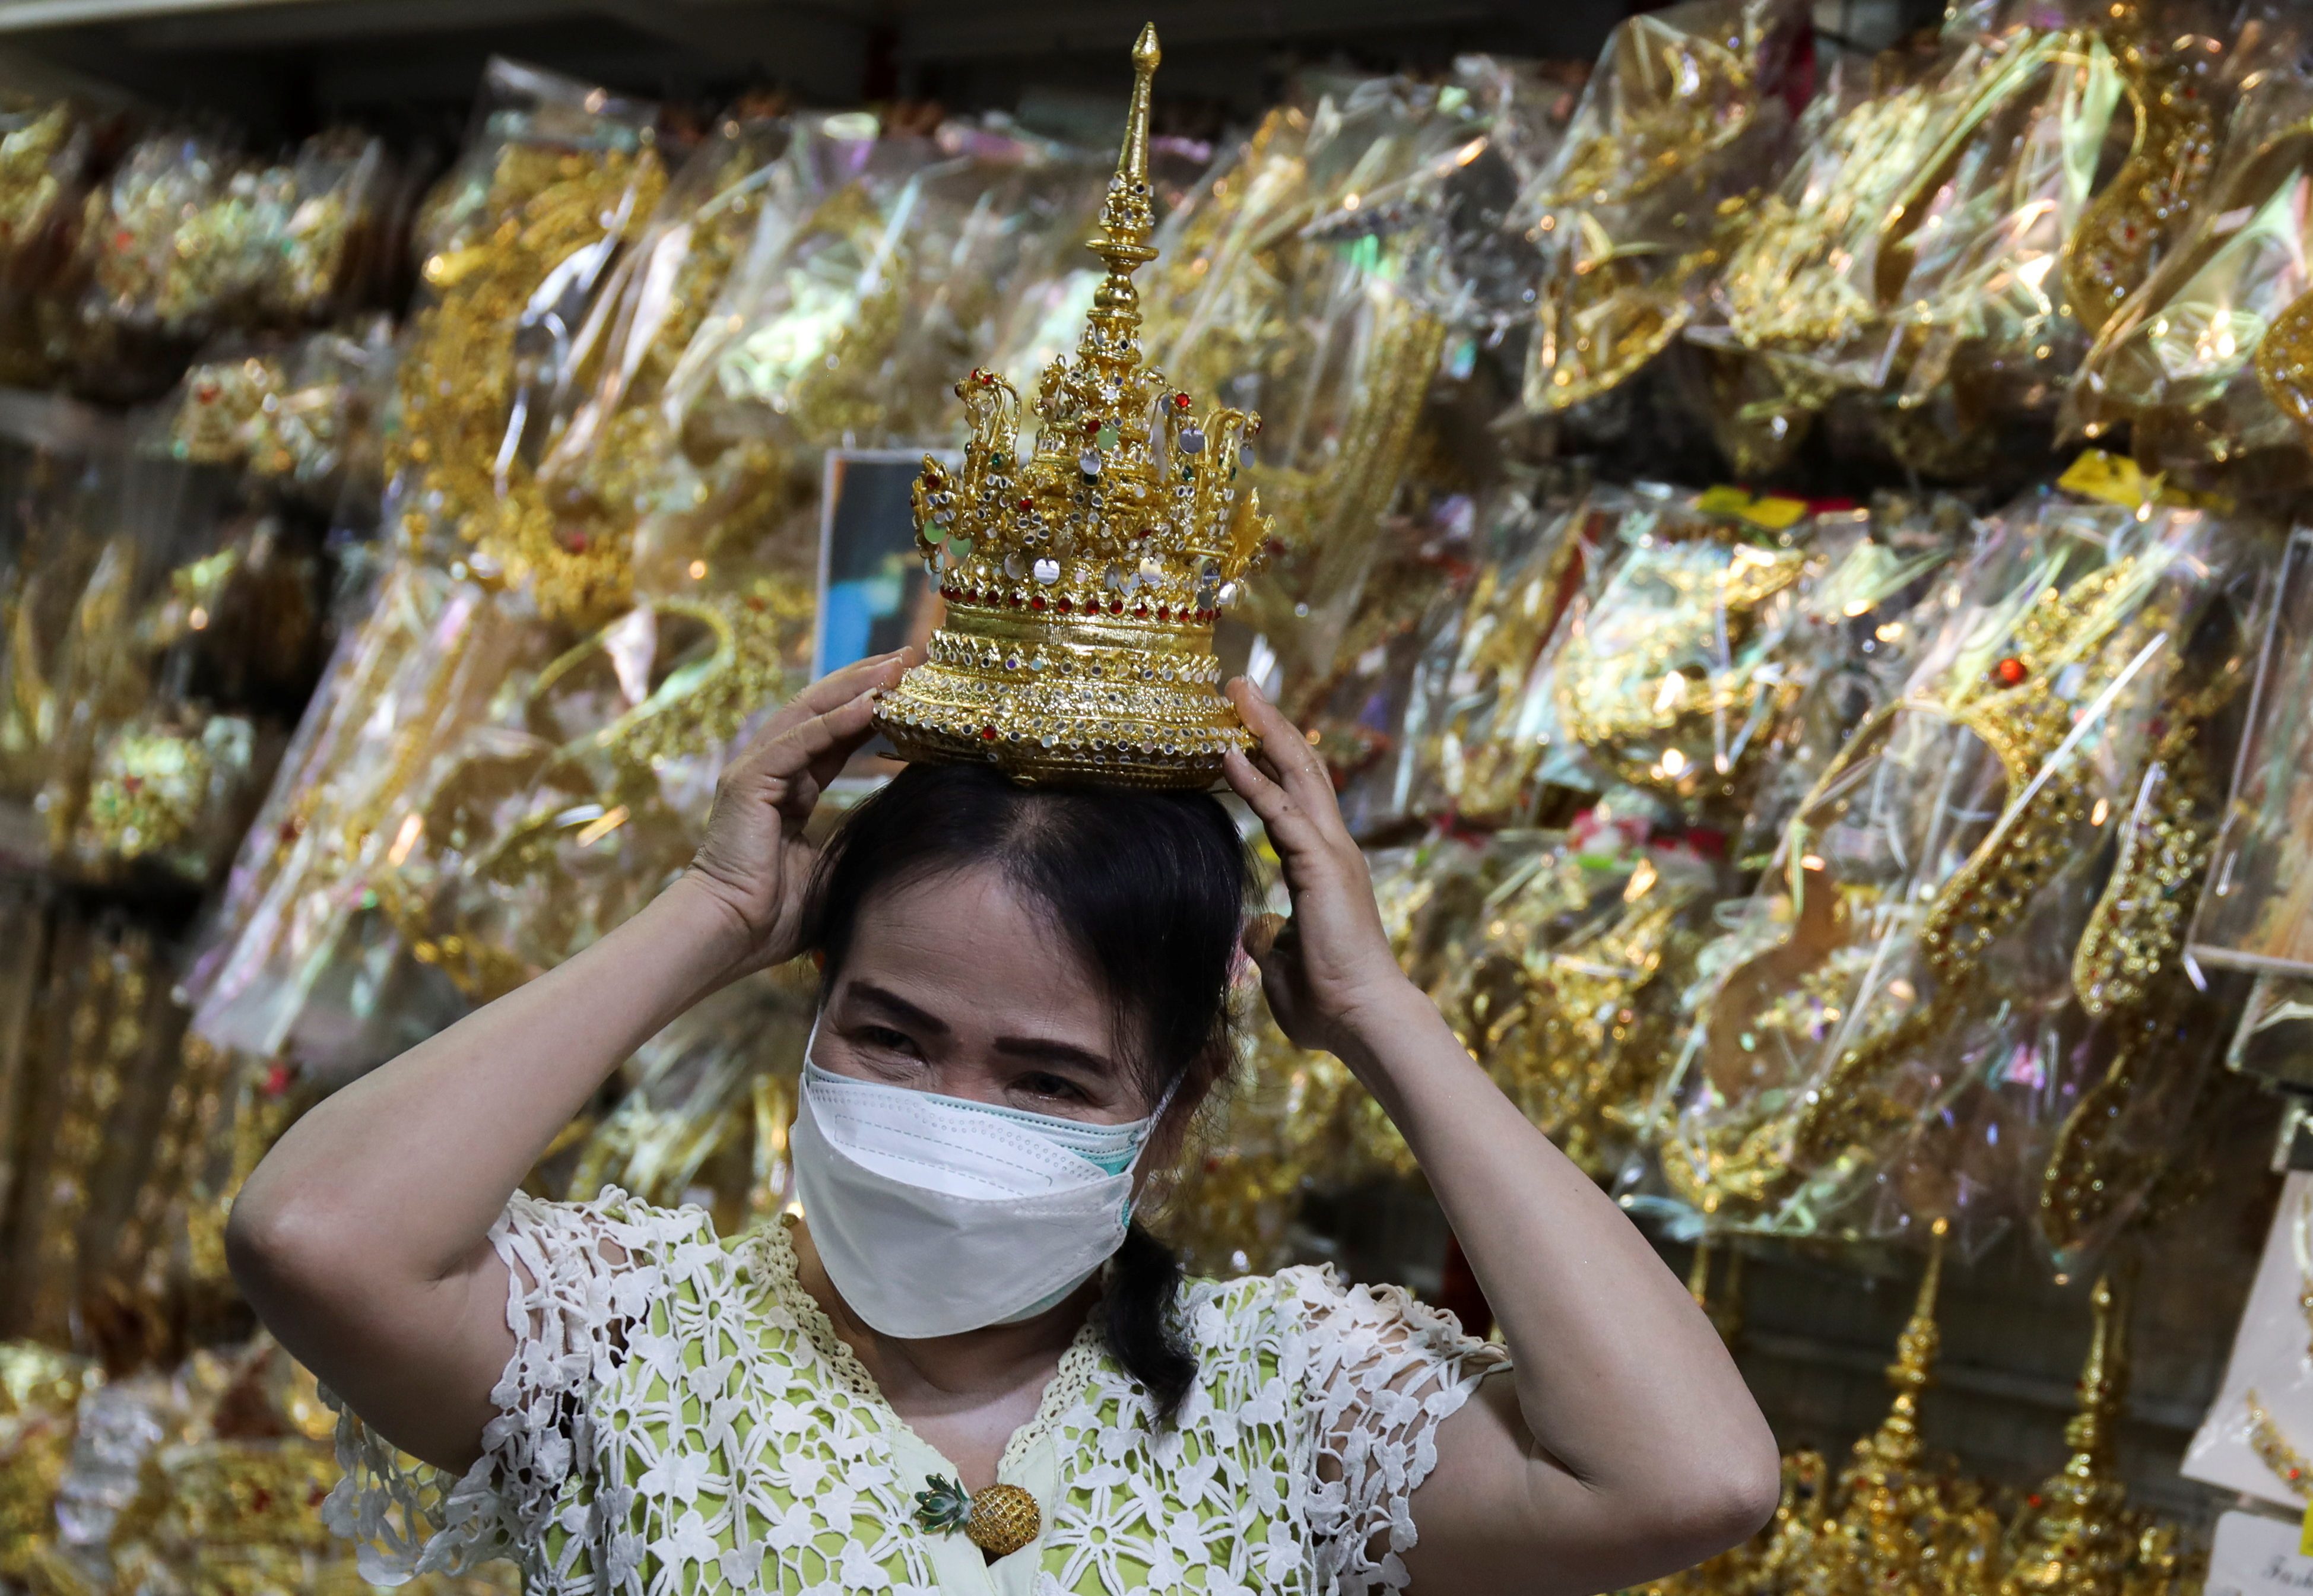 K-pop sensation Lisa thrills Thai fans with traditional headgear